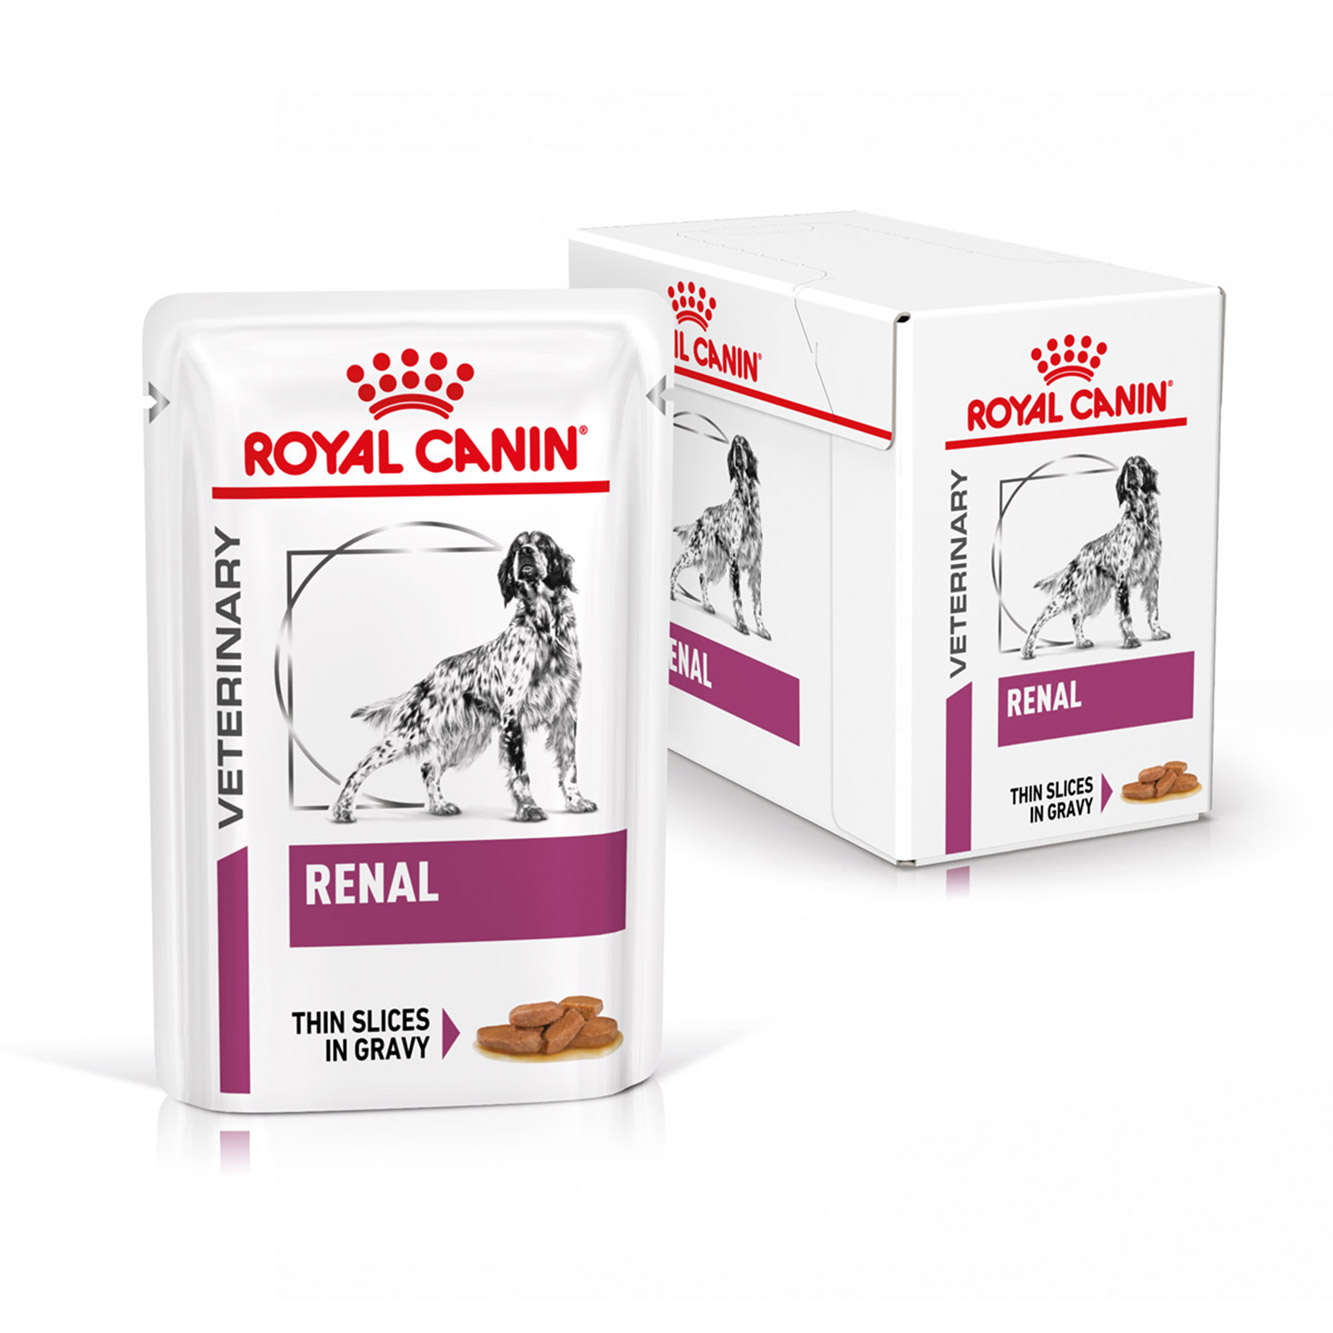 Royal Canin Hund Renal x 100g preisgünstig bestellen